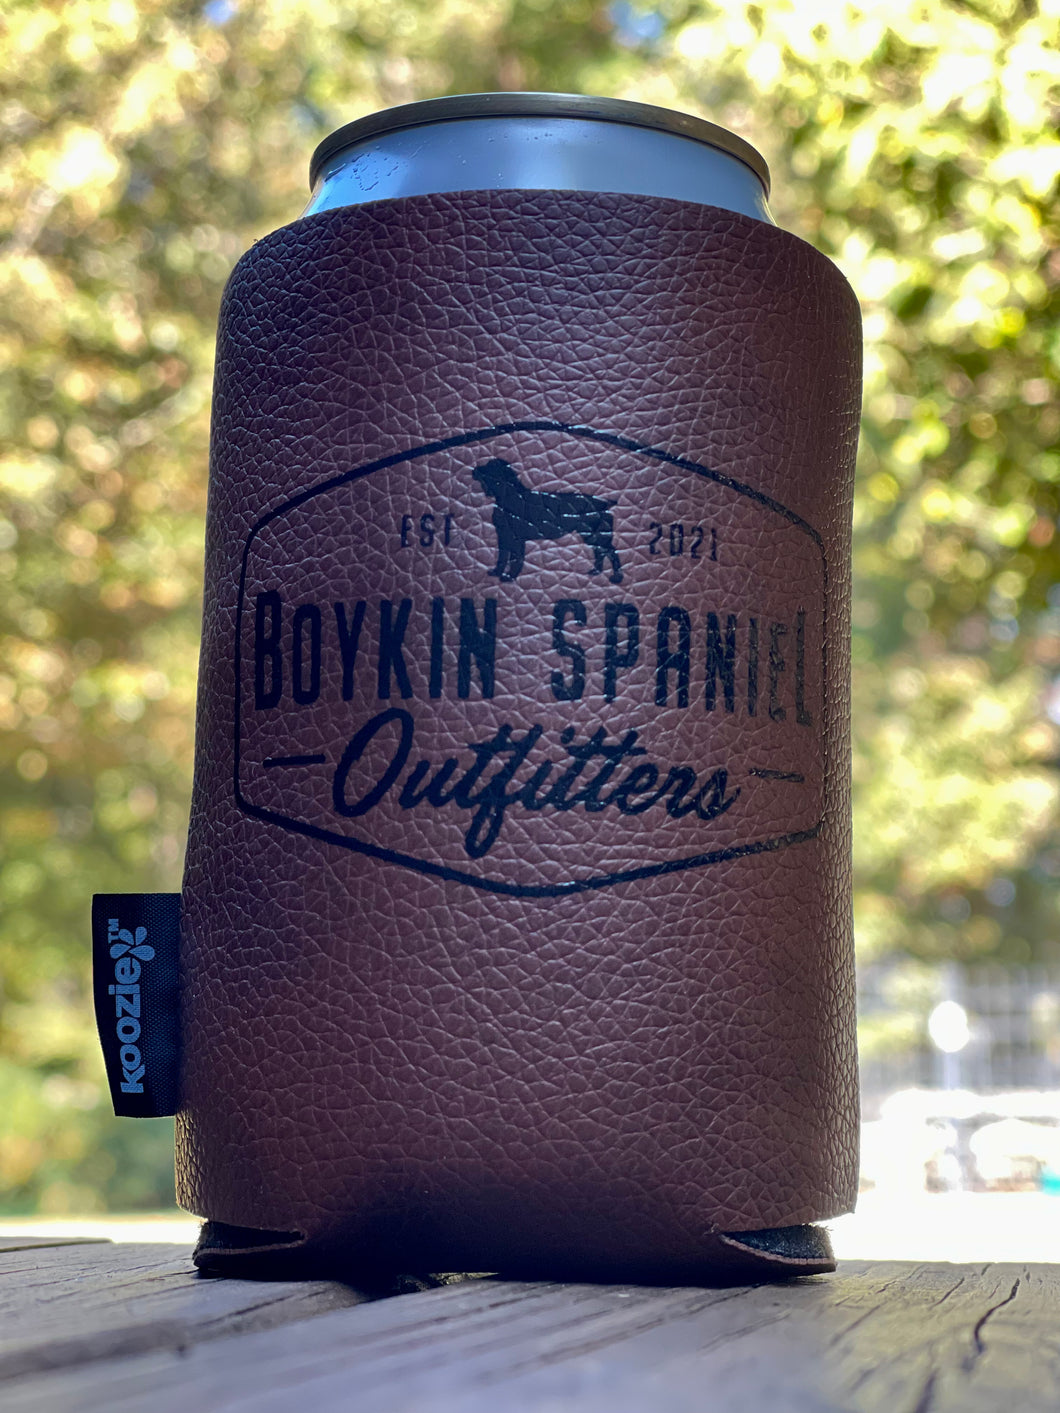 Boykin Spaniel Outfitters leather koozie